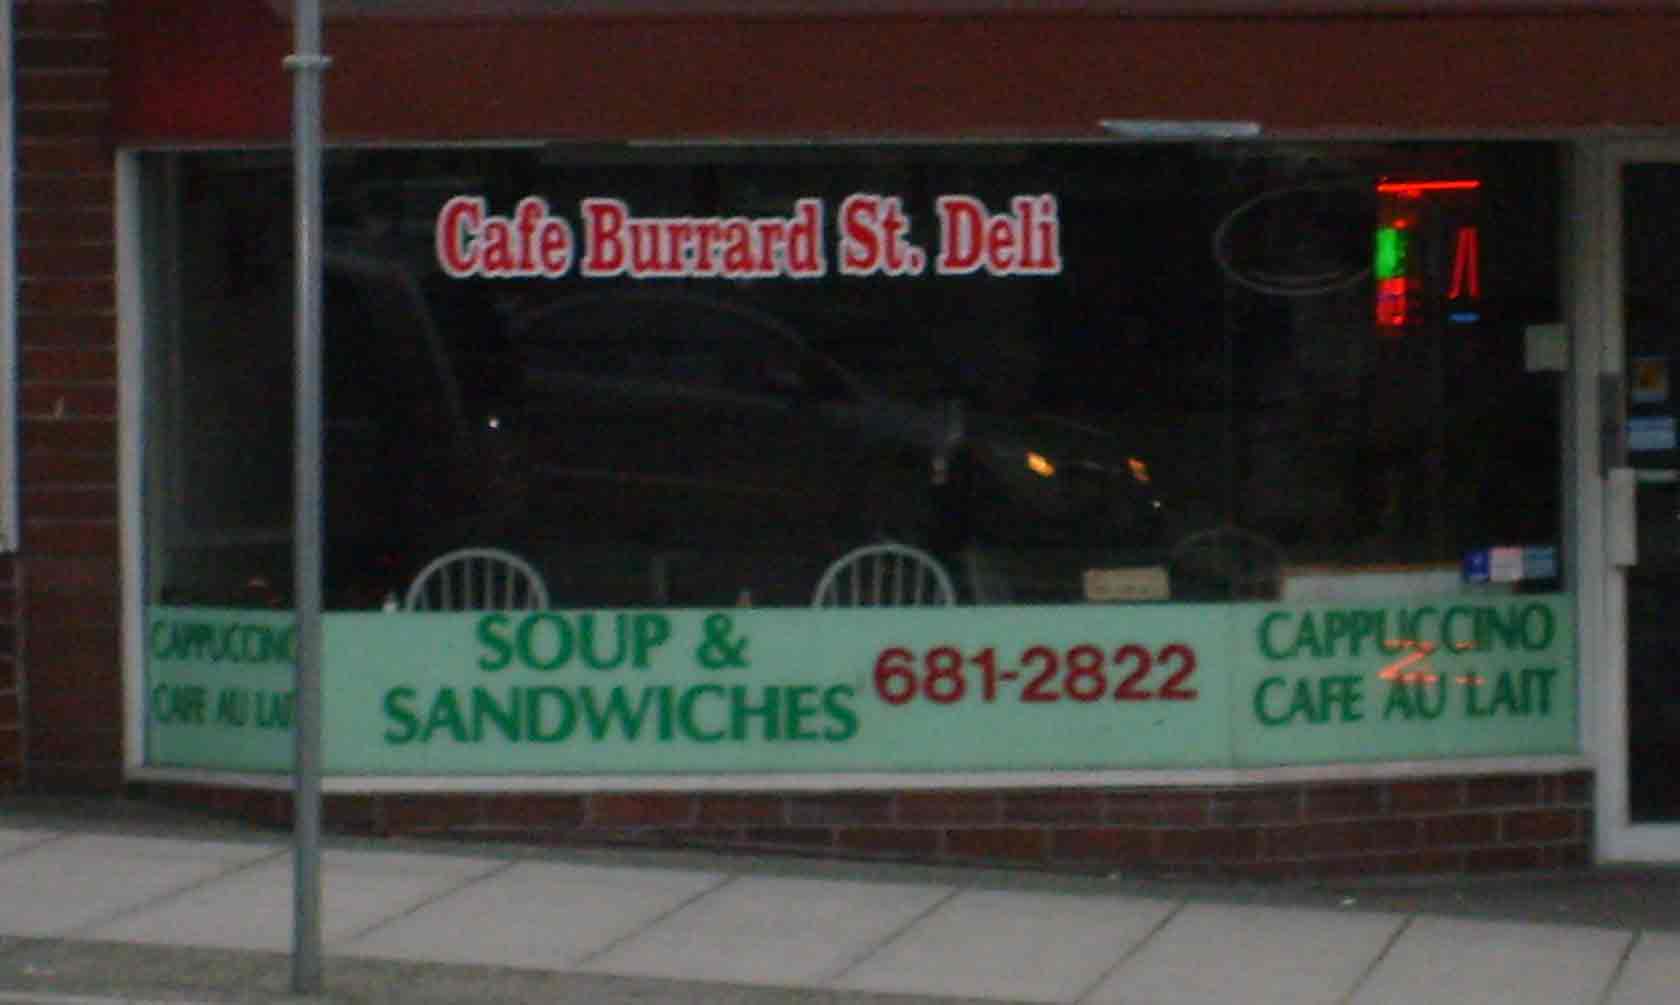  Café Burrard St. Deli